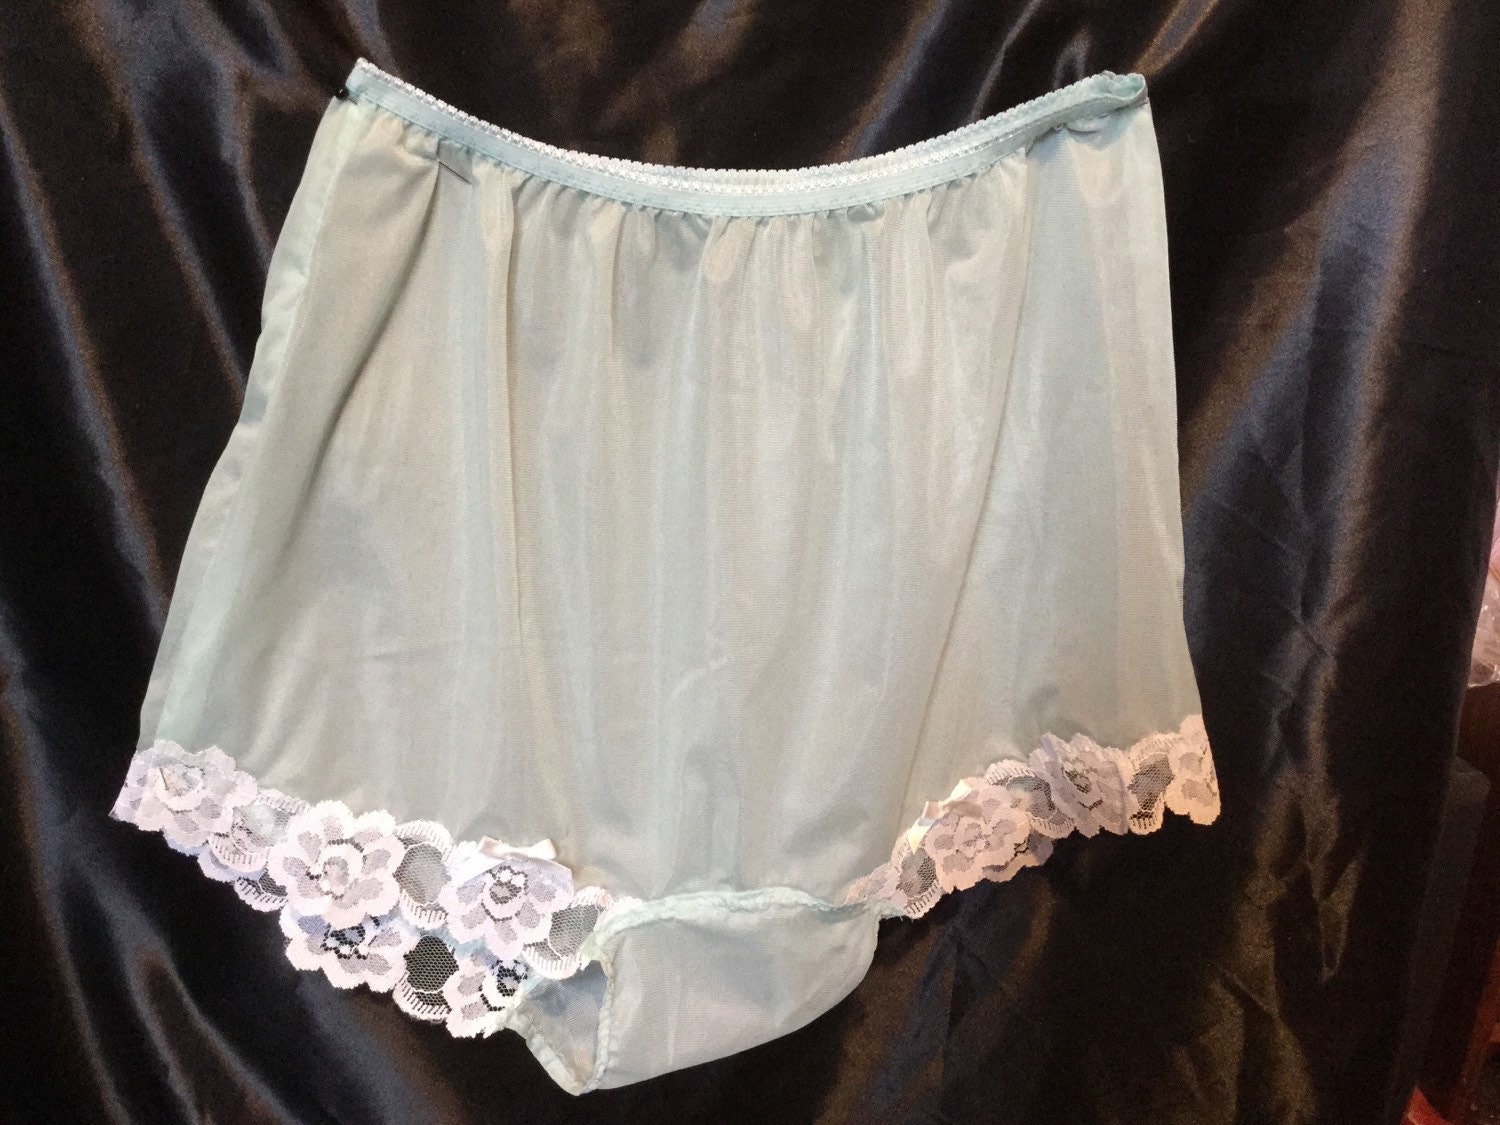 Semi sheer nylon panties retro vintage style open or closed